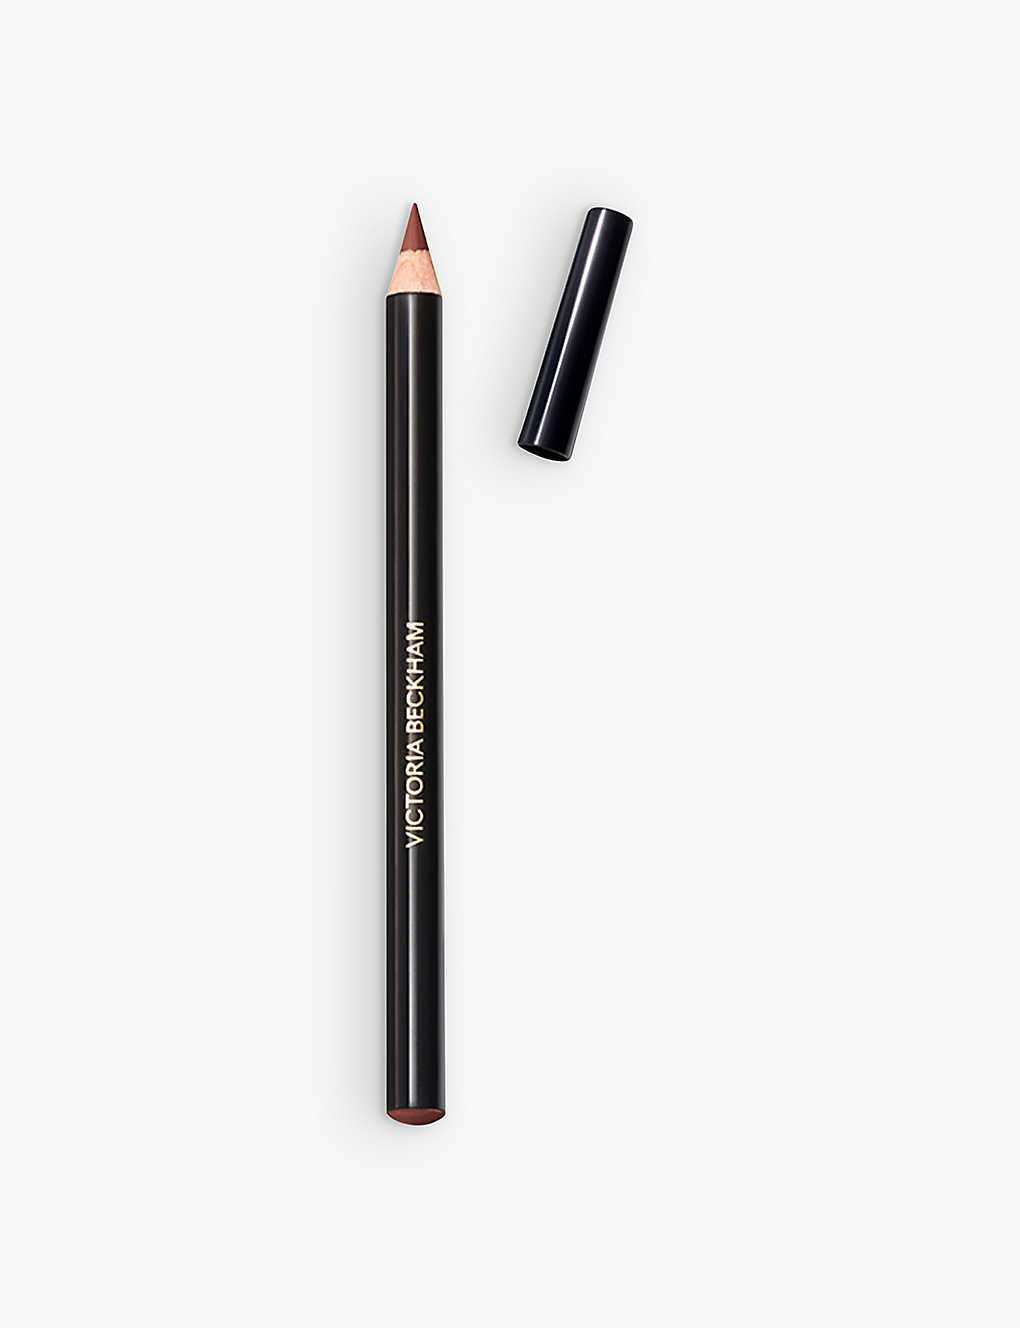 Victoria Beckham Beauty 5 Lip Definer Lip Pencil 1.1g In Multi-coloured